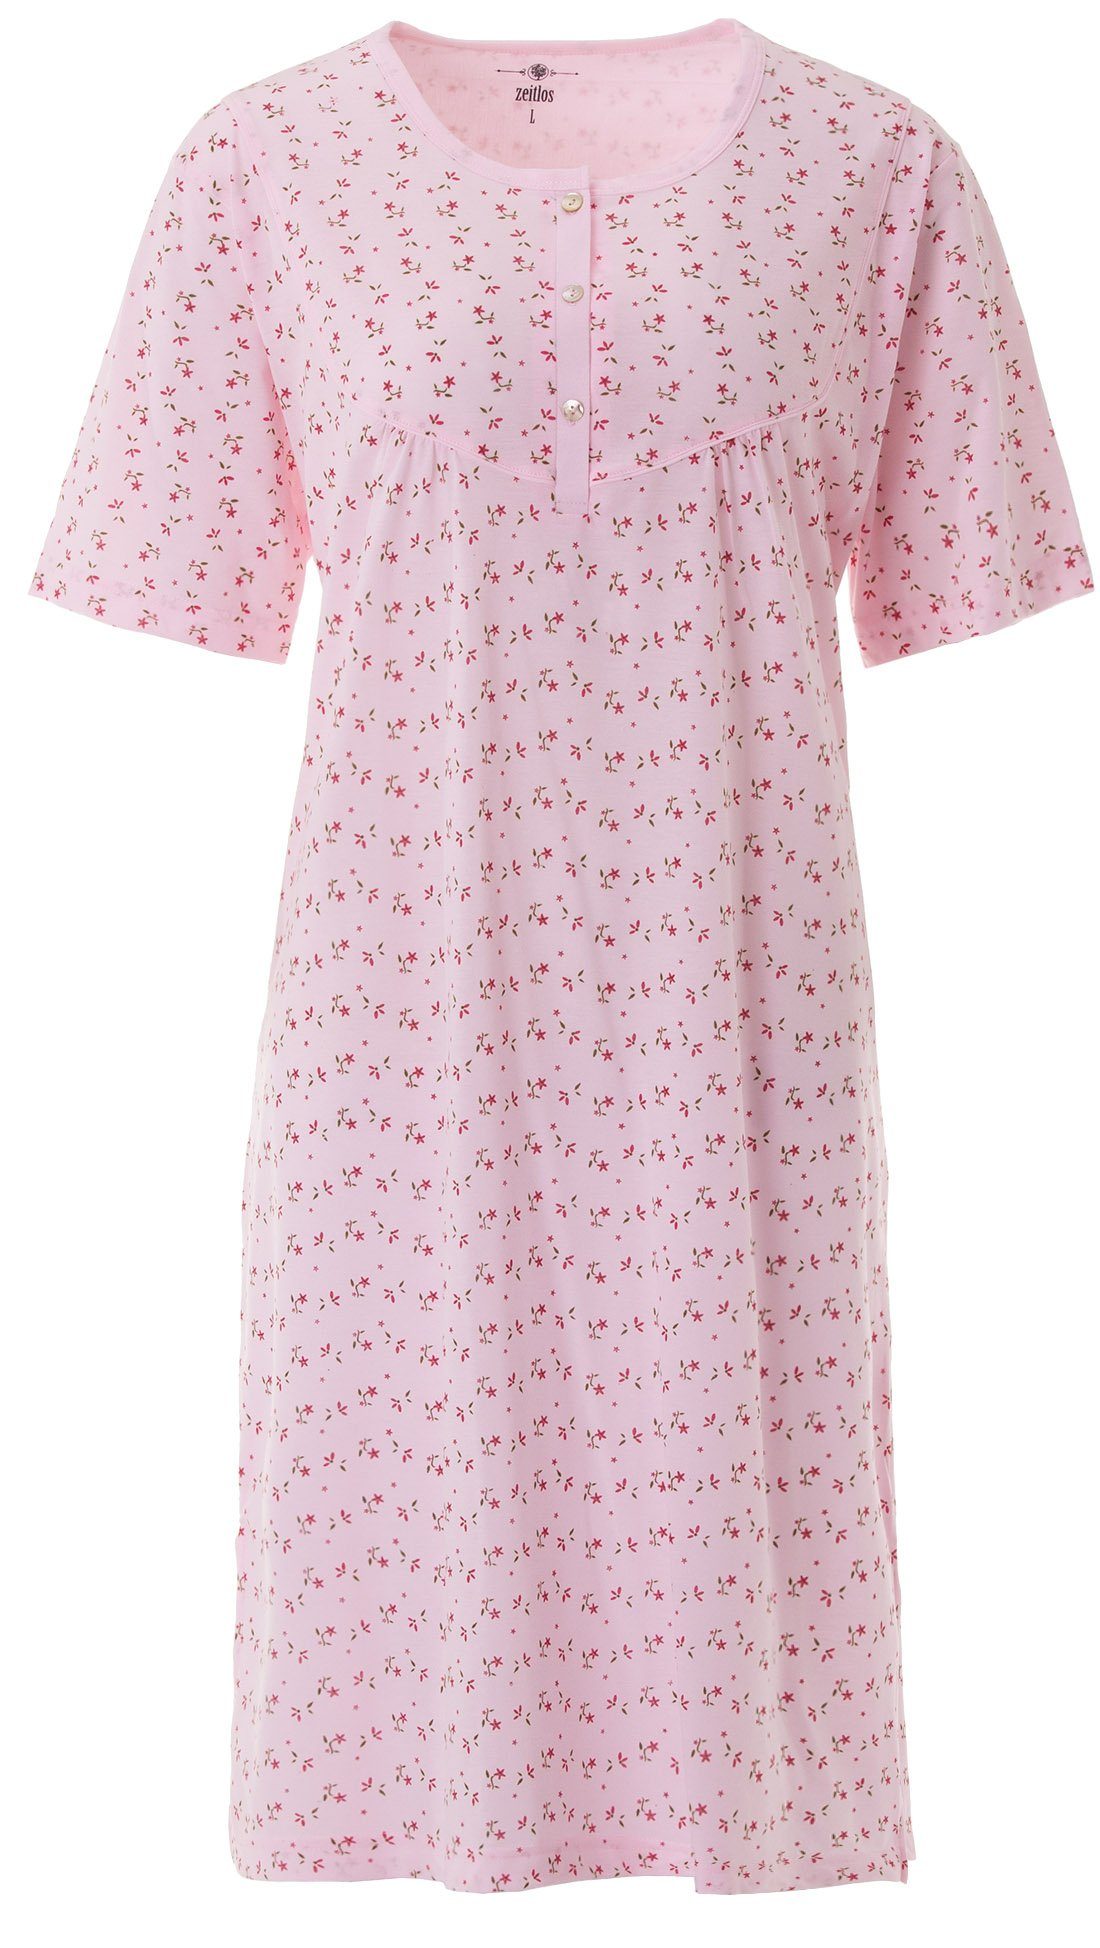 zeitlos Nachthemd Nachthemd Kurzarm - Mille Fleur rosa